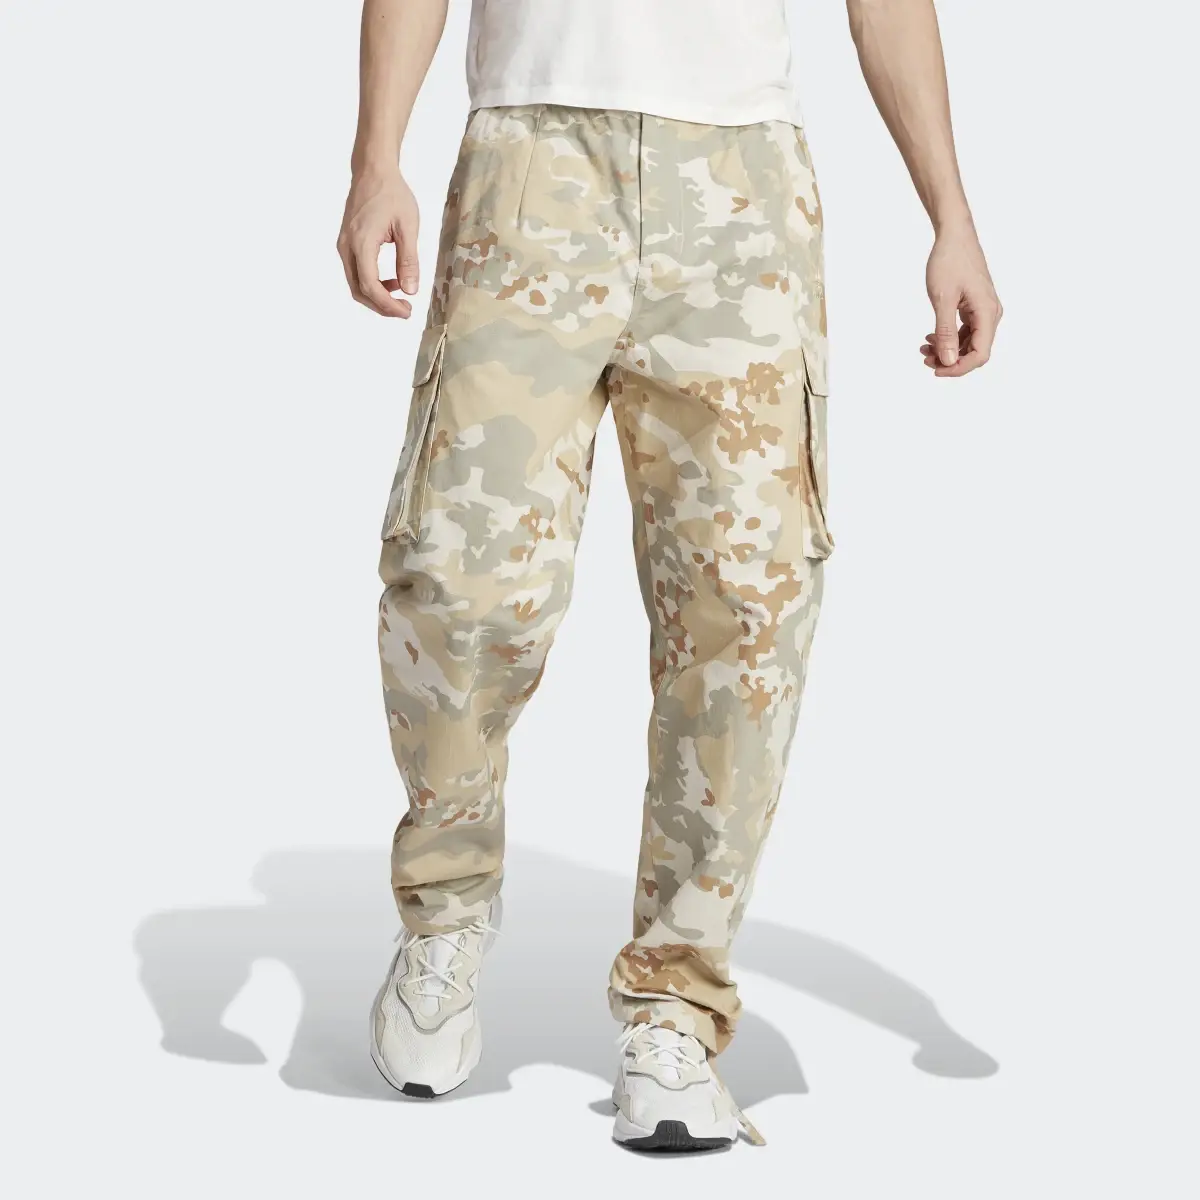 Adidas Pantalon cargo graphique imprimé camouflage. 1